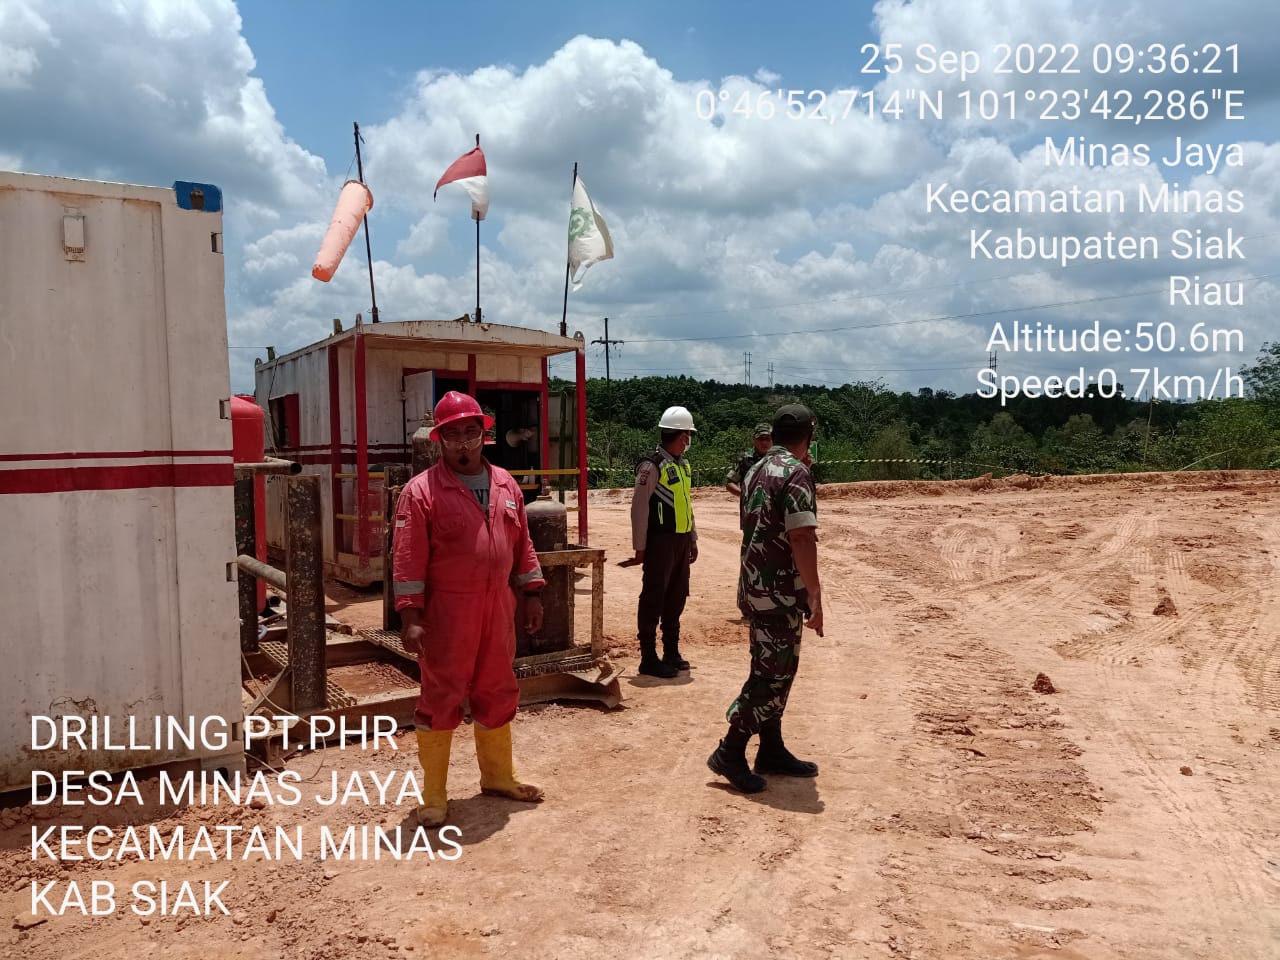 Serma Muhajir, Serka Alif Nurhaqqi dan Sertu Ardhi Syam Rutin Patroli Drilling Demi Keamanan OVN di PT PHR Minas